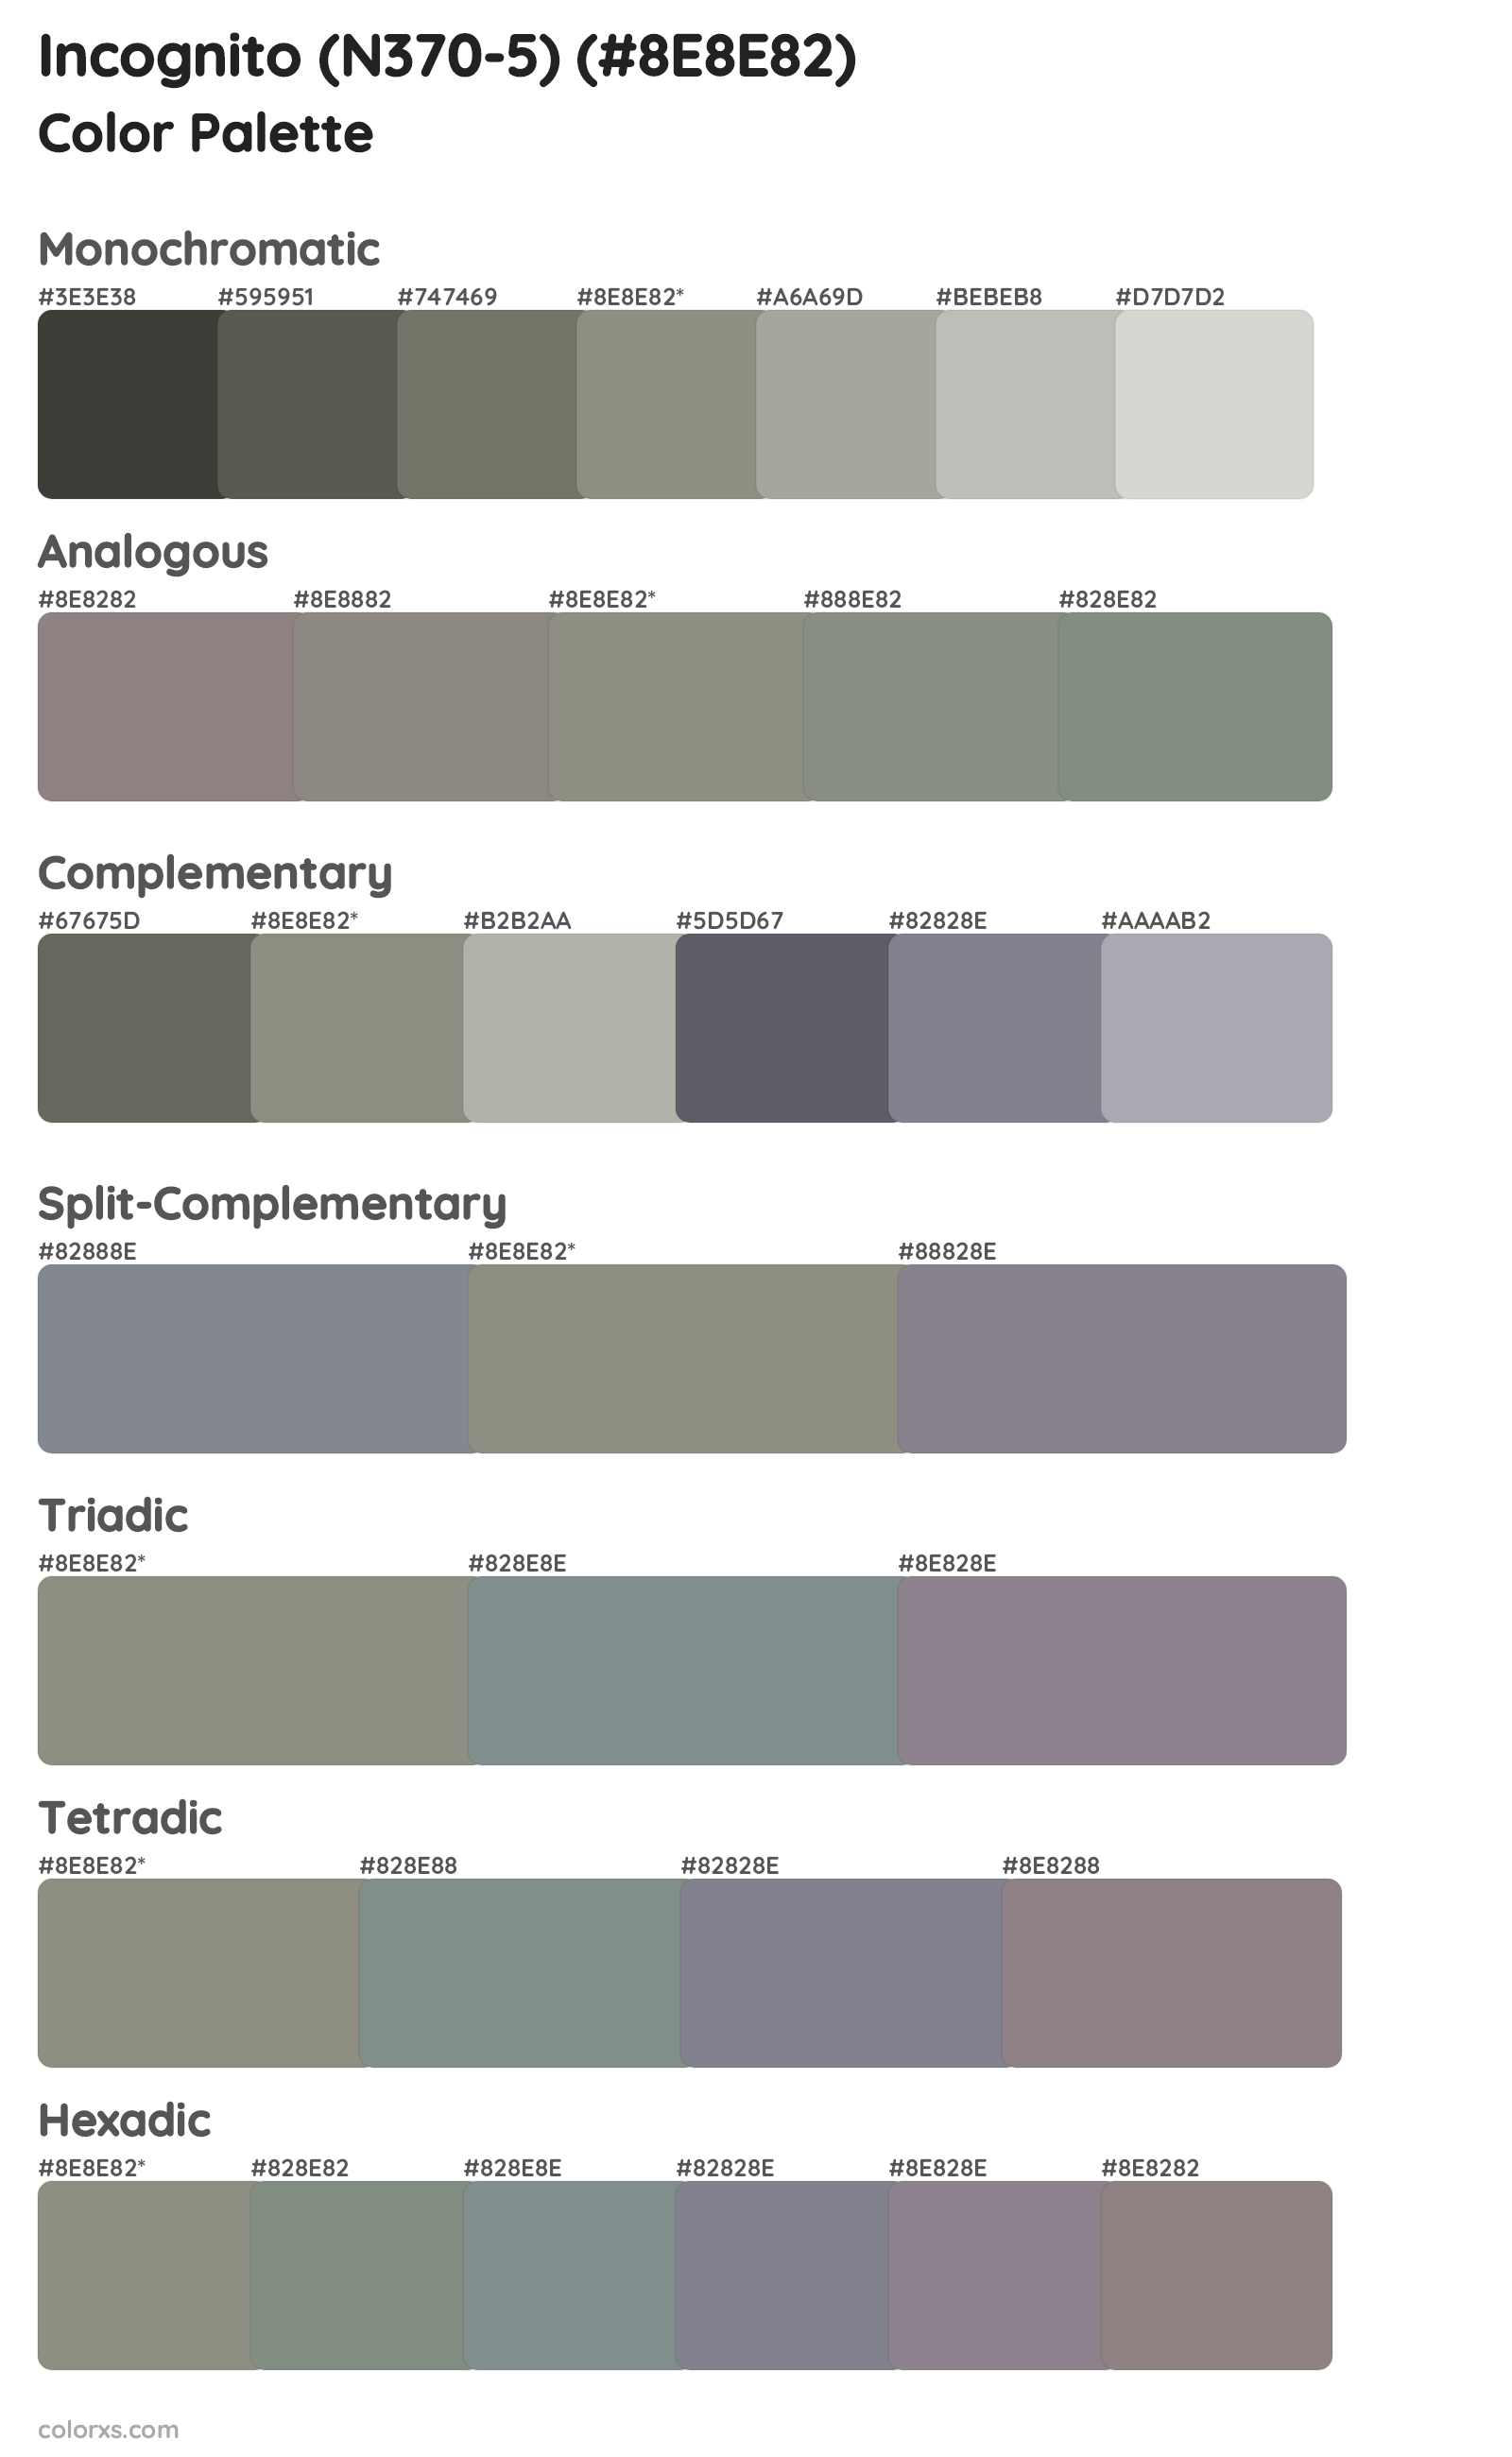 Incognito (N370-5) Color Scheme Palettes